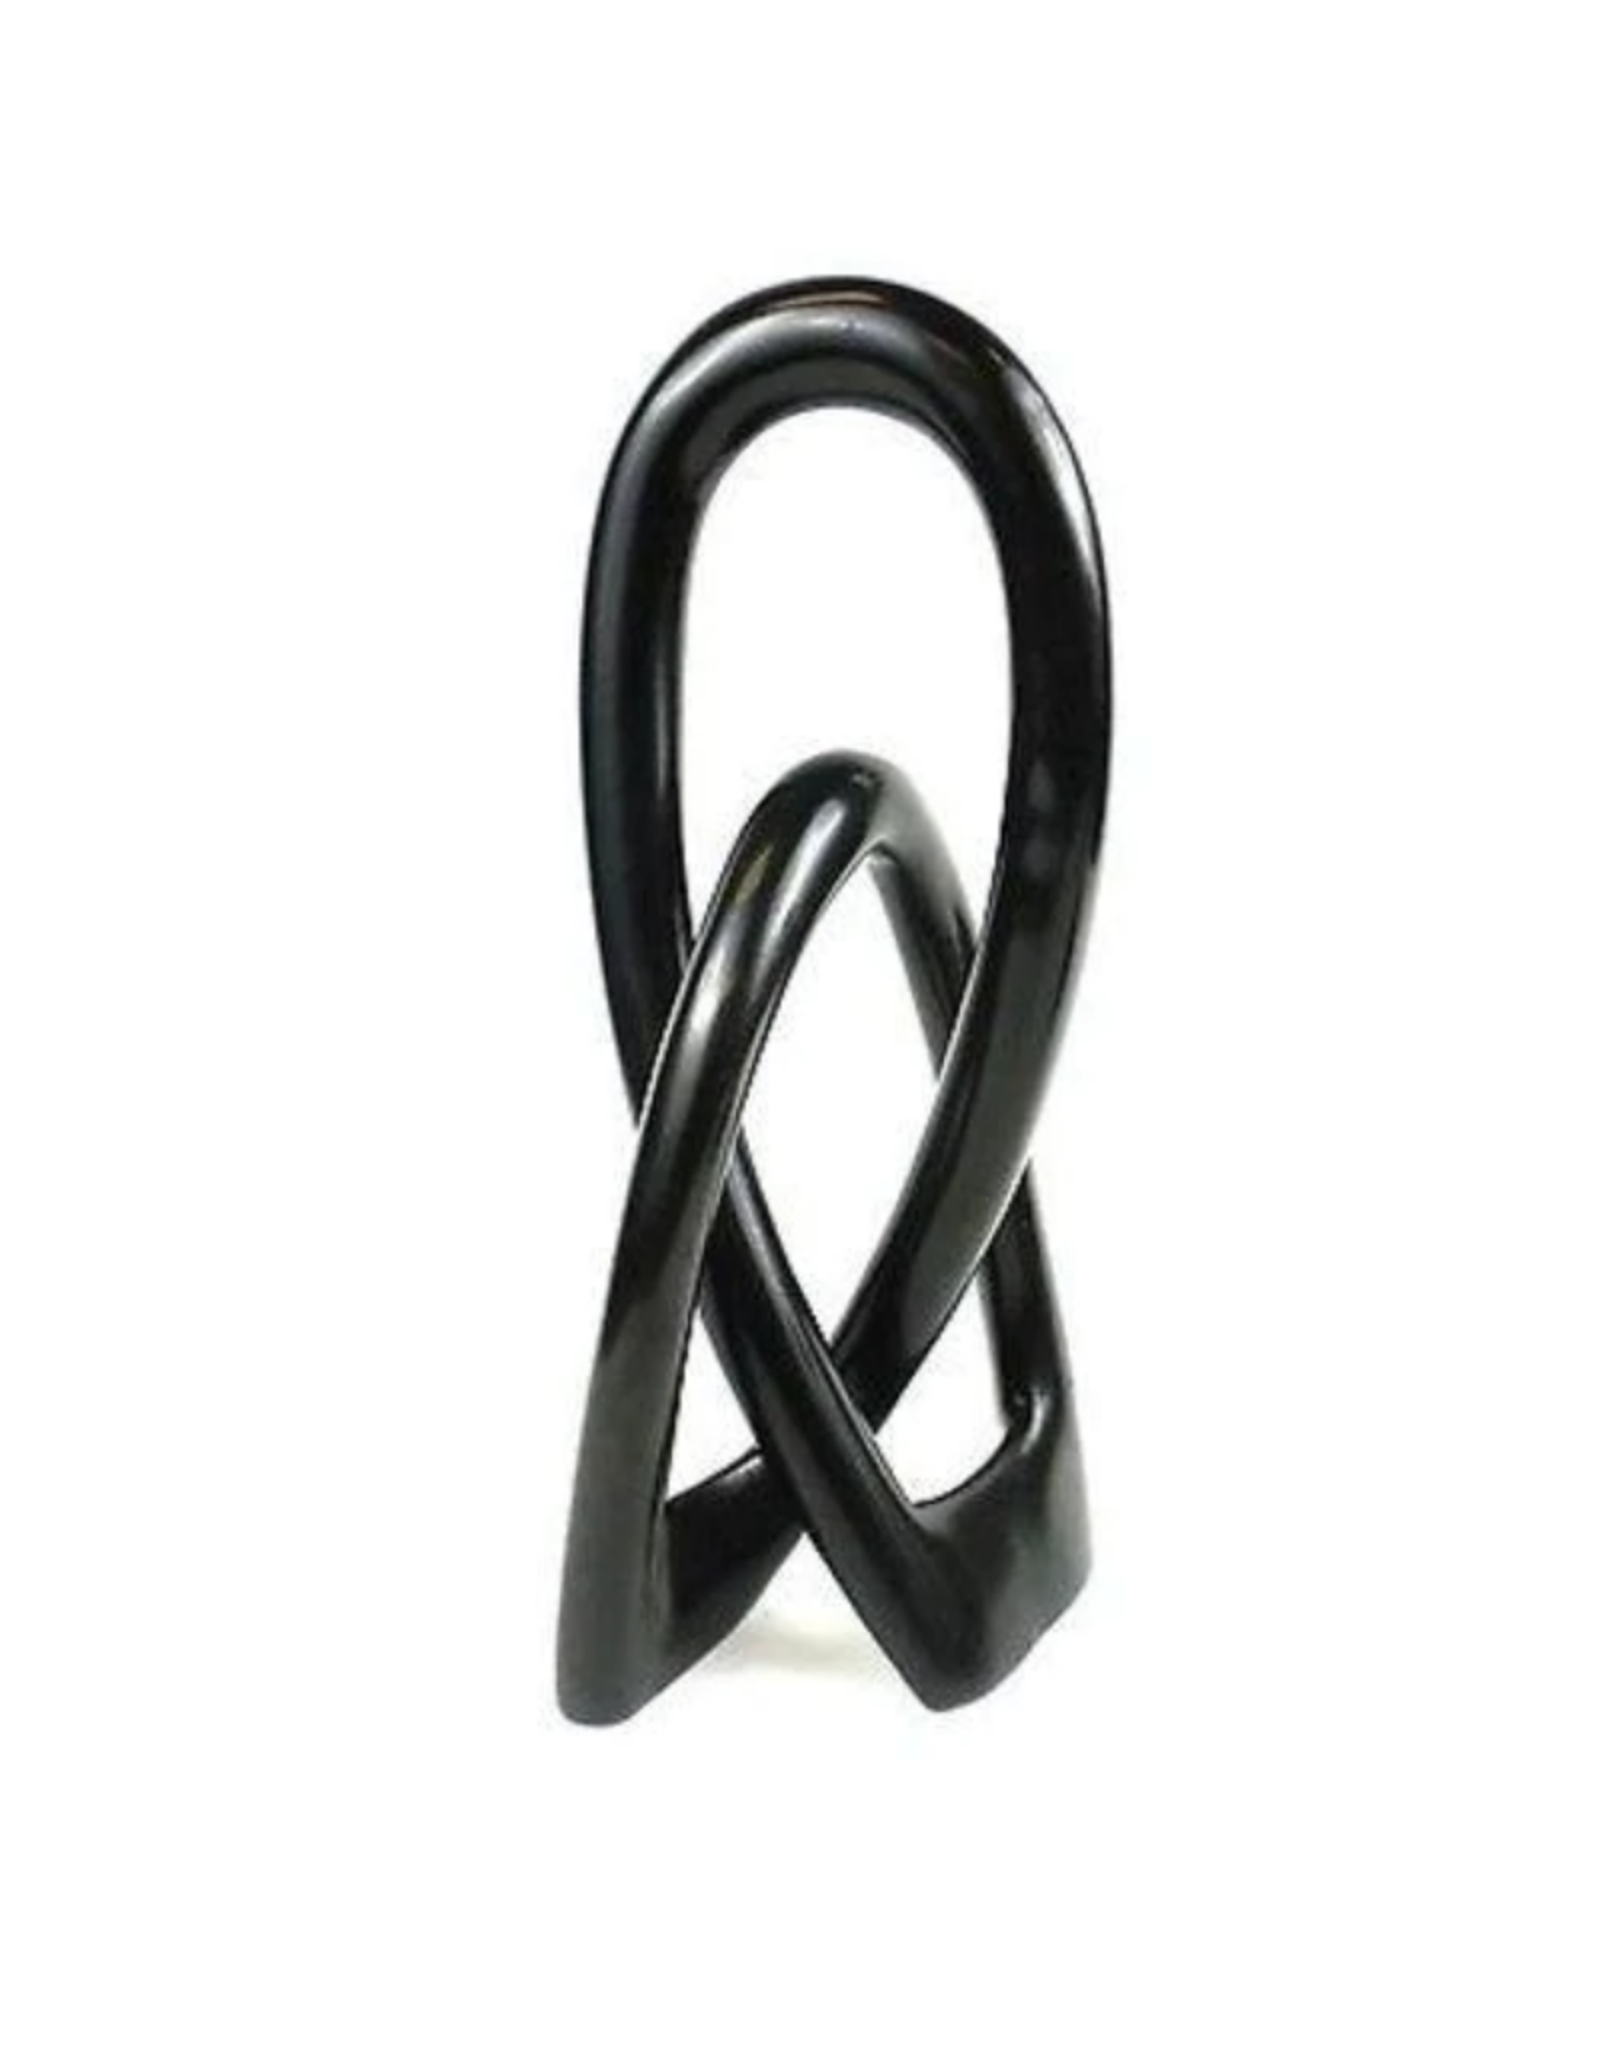 Global Crafts Eternal Love Knot Sculpture 10" Black - Kenya